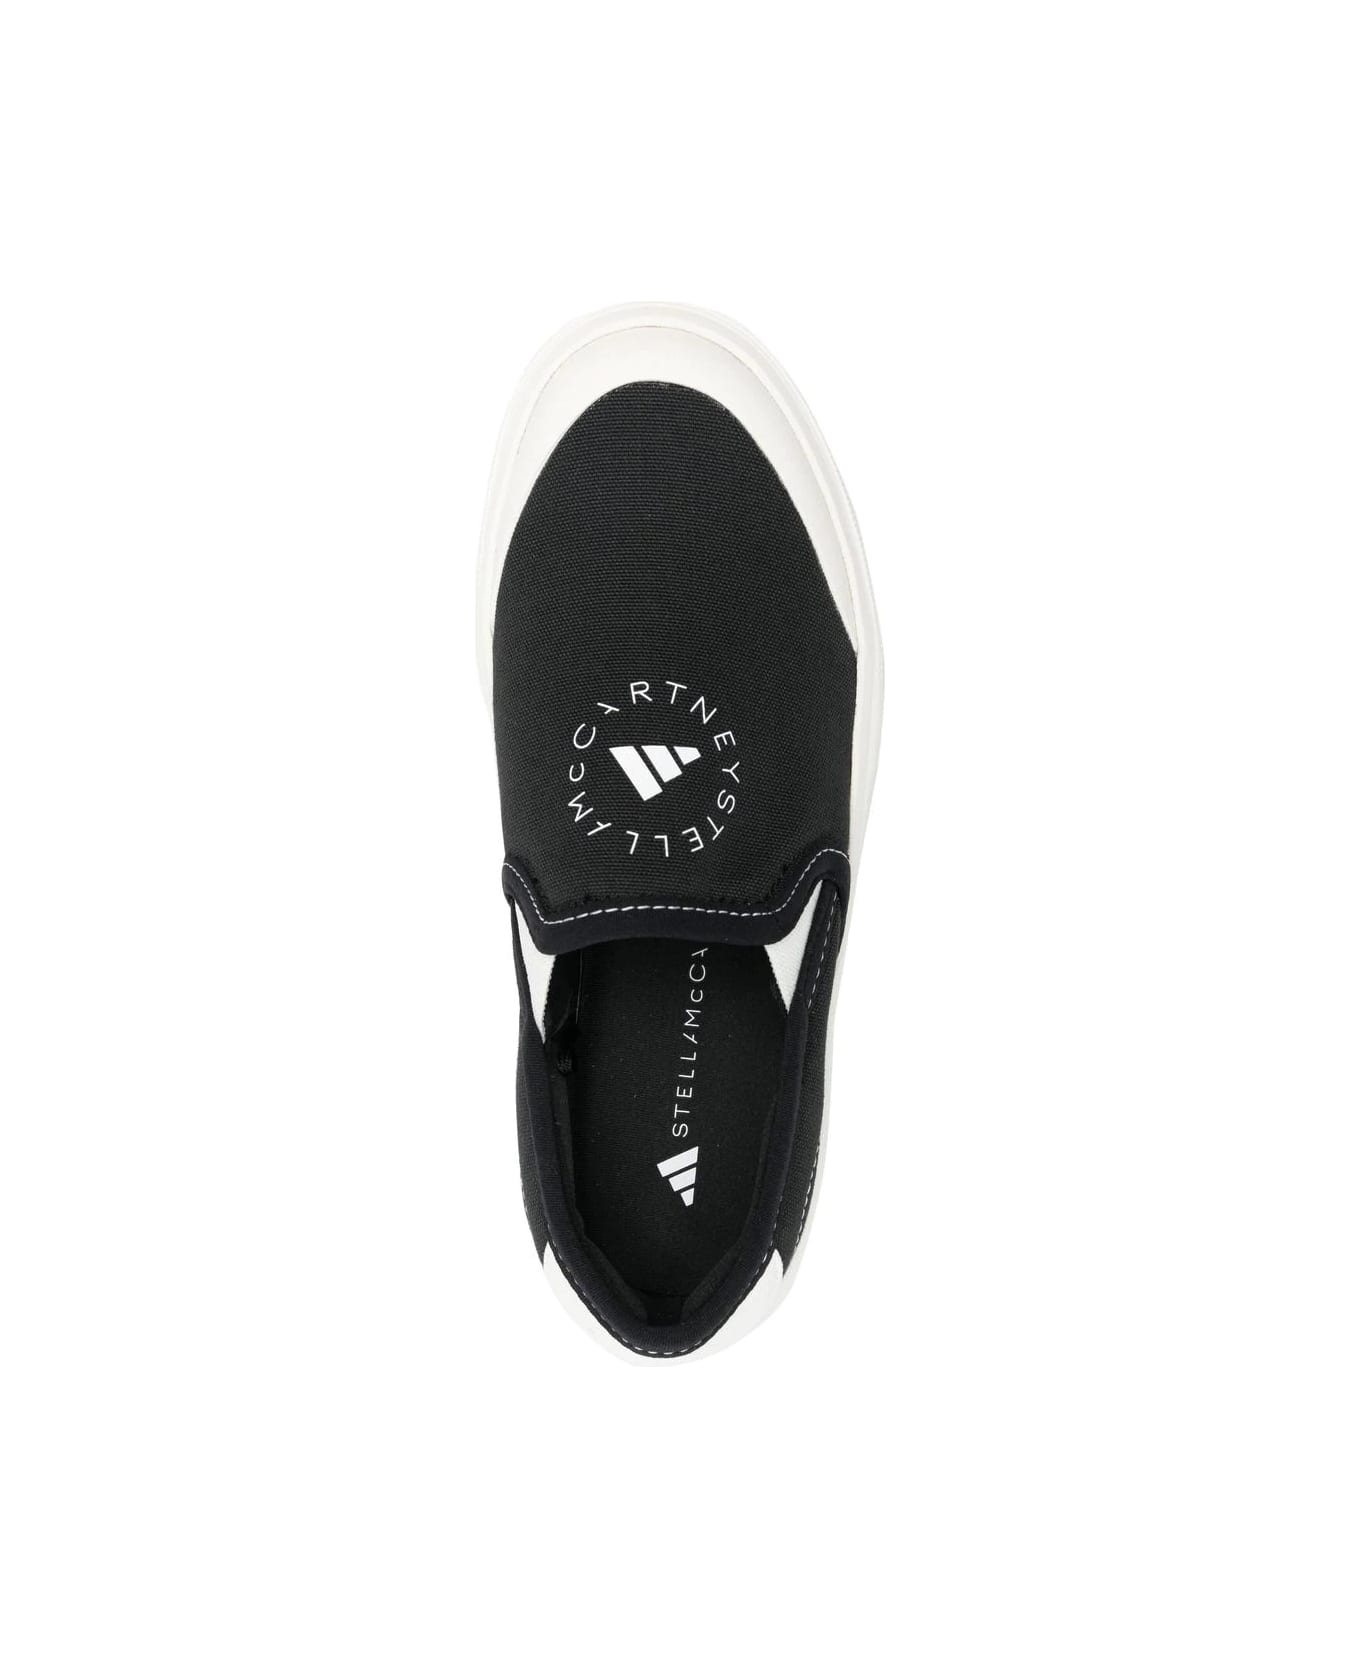 Adidas by Stella McCartney Court Slip-on Sneakers - Cblack Owhite Ftwwht